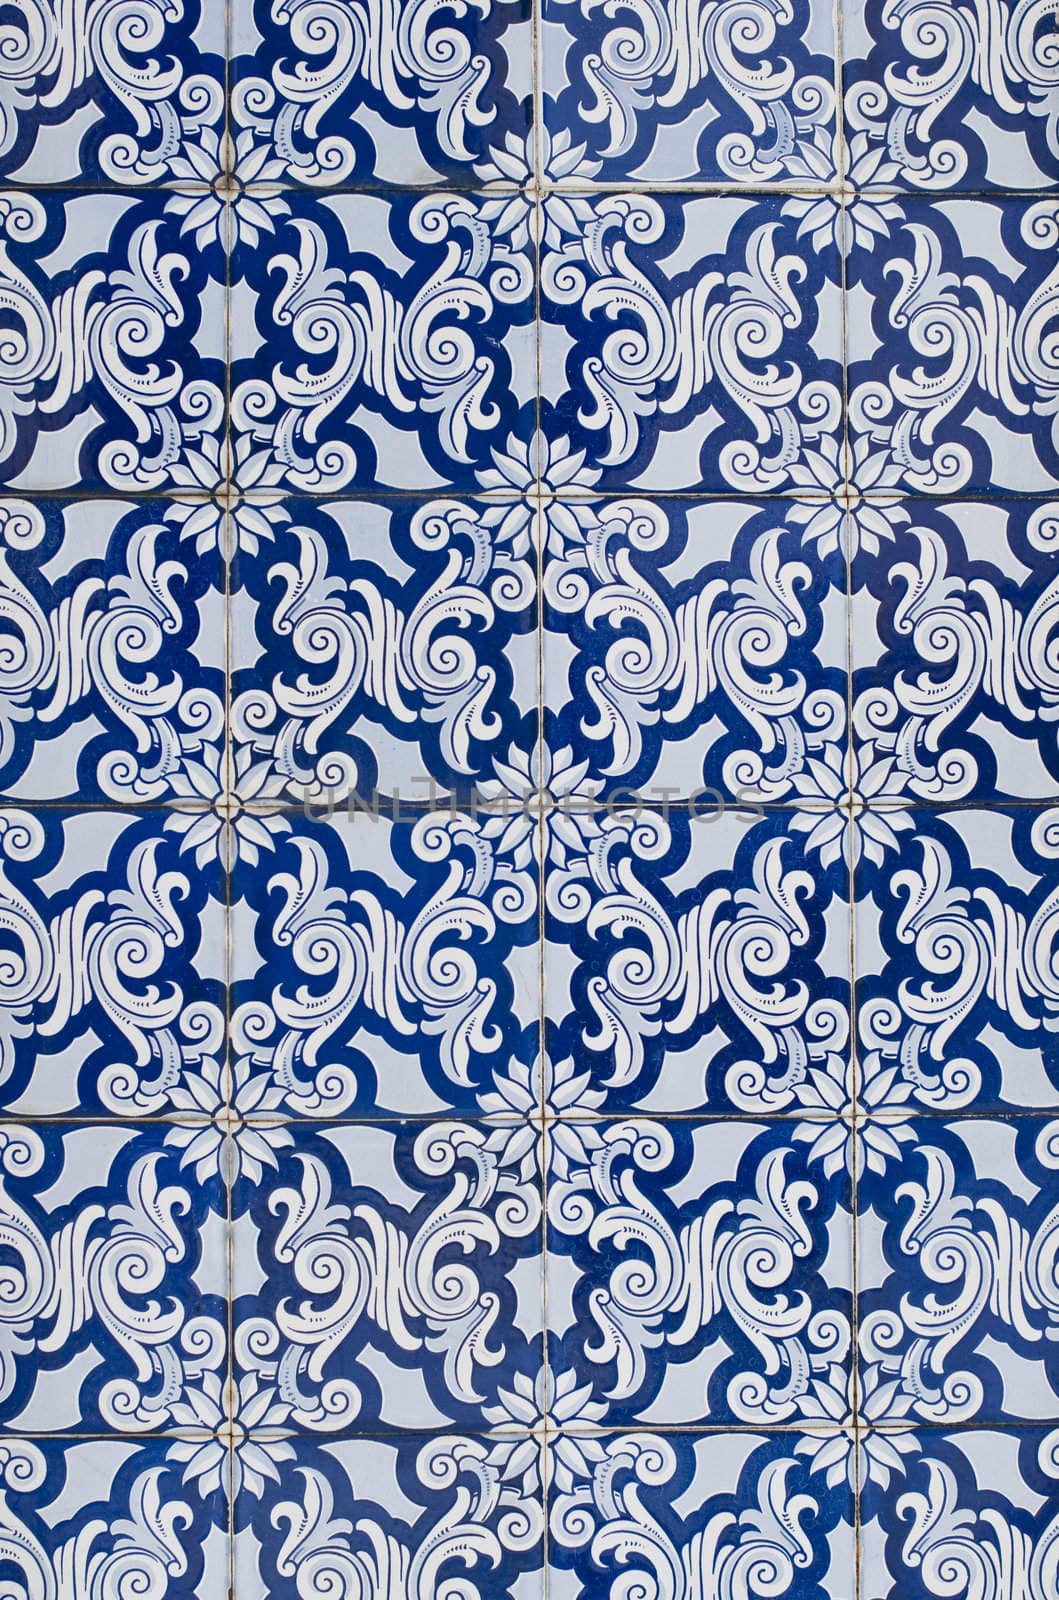 Portuguese glazed tiles 091 by homydesign